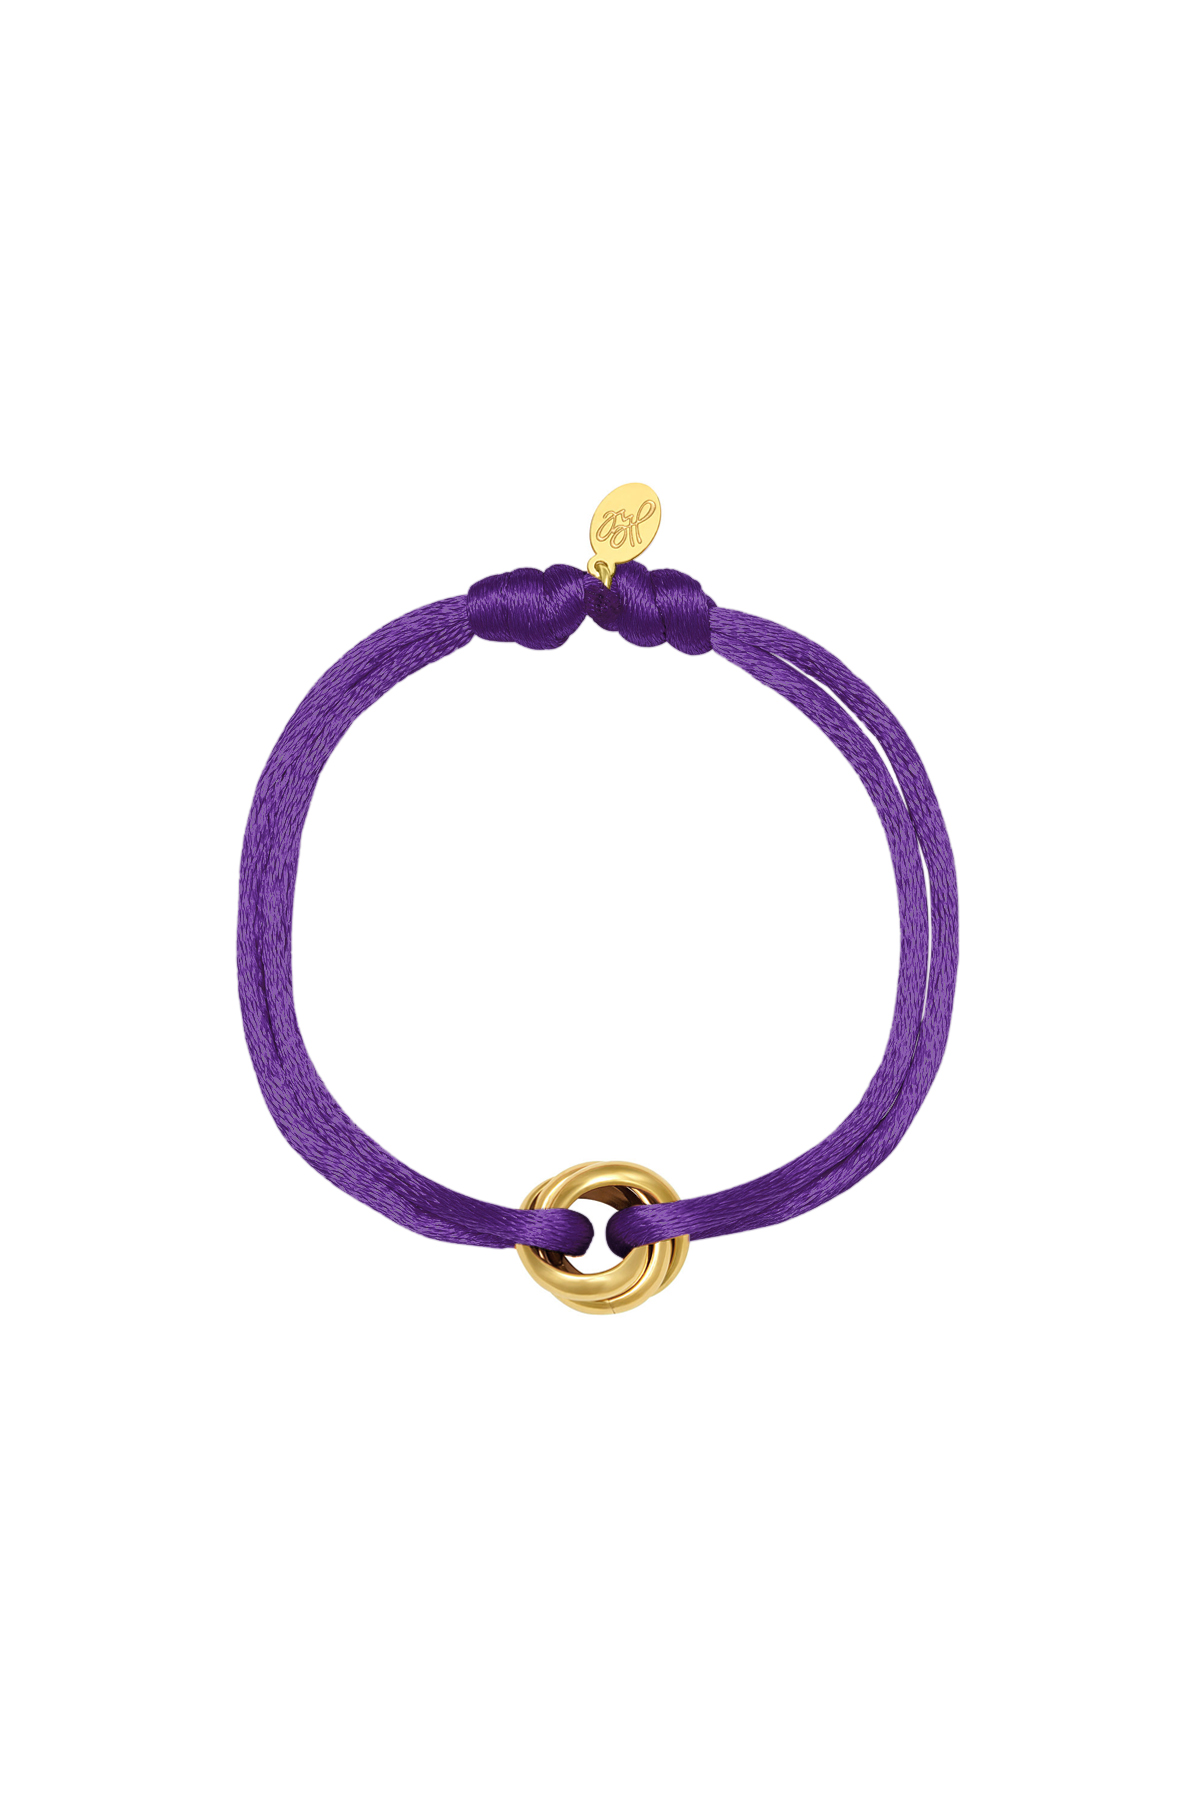 Bracelet Satin Knot purple Stainless Steel 